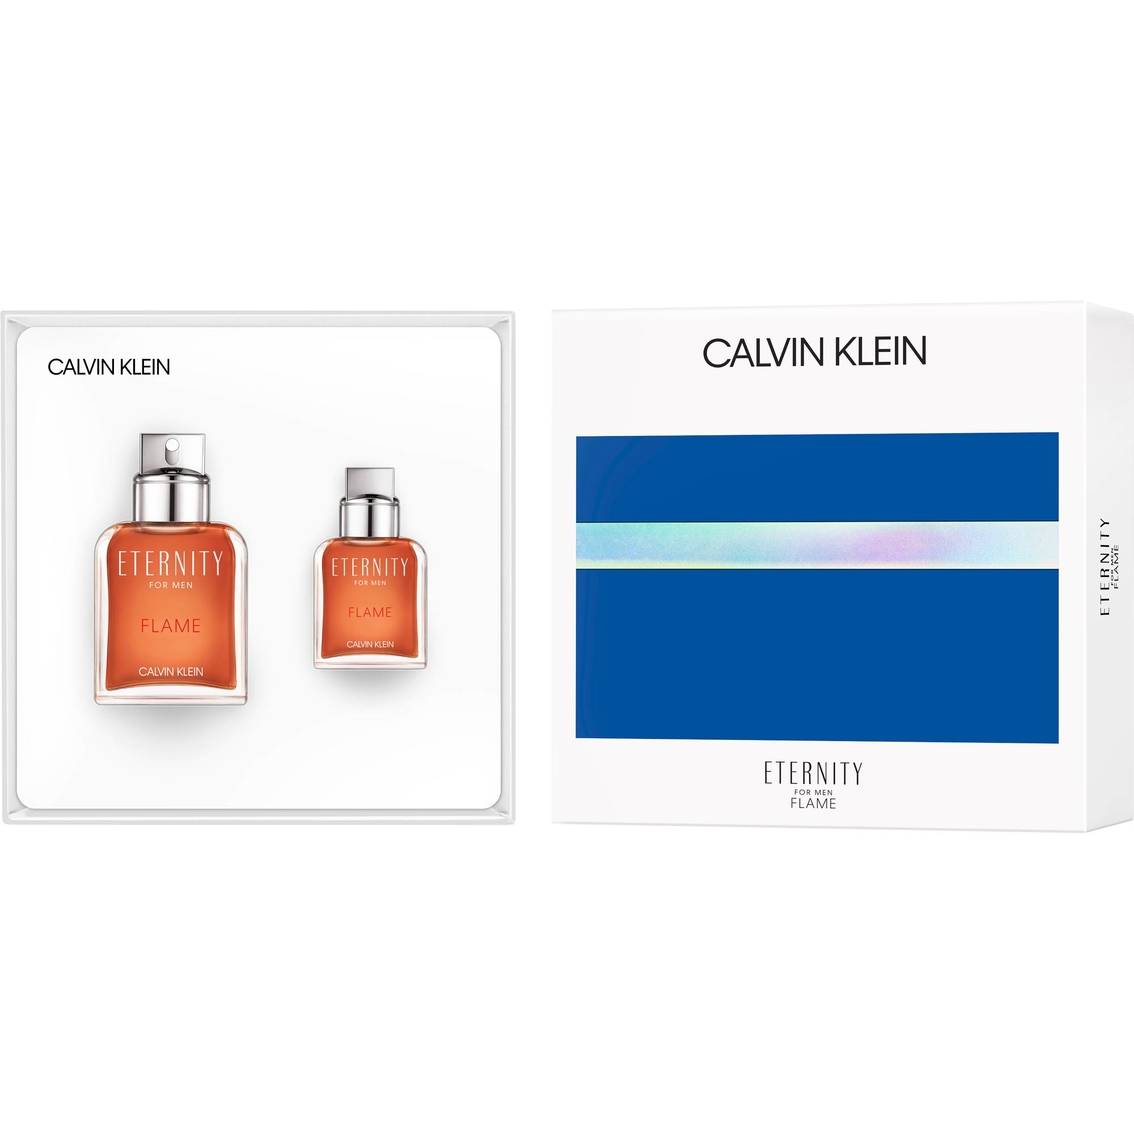 | Flame Exchange Gift Eau Set Gifts | Beauty Health For | Klein The Toilette De Calvin Eternity Him Sets & Shop